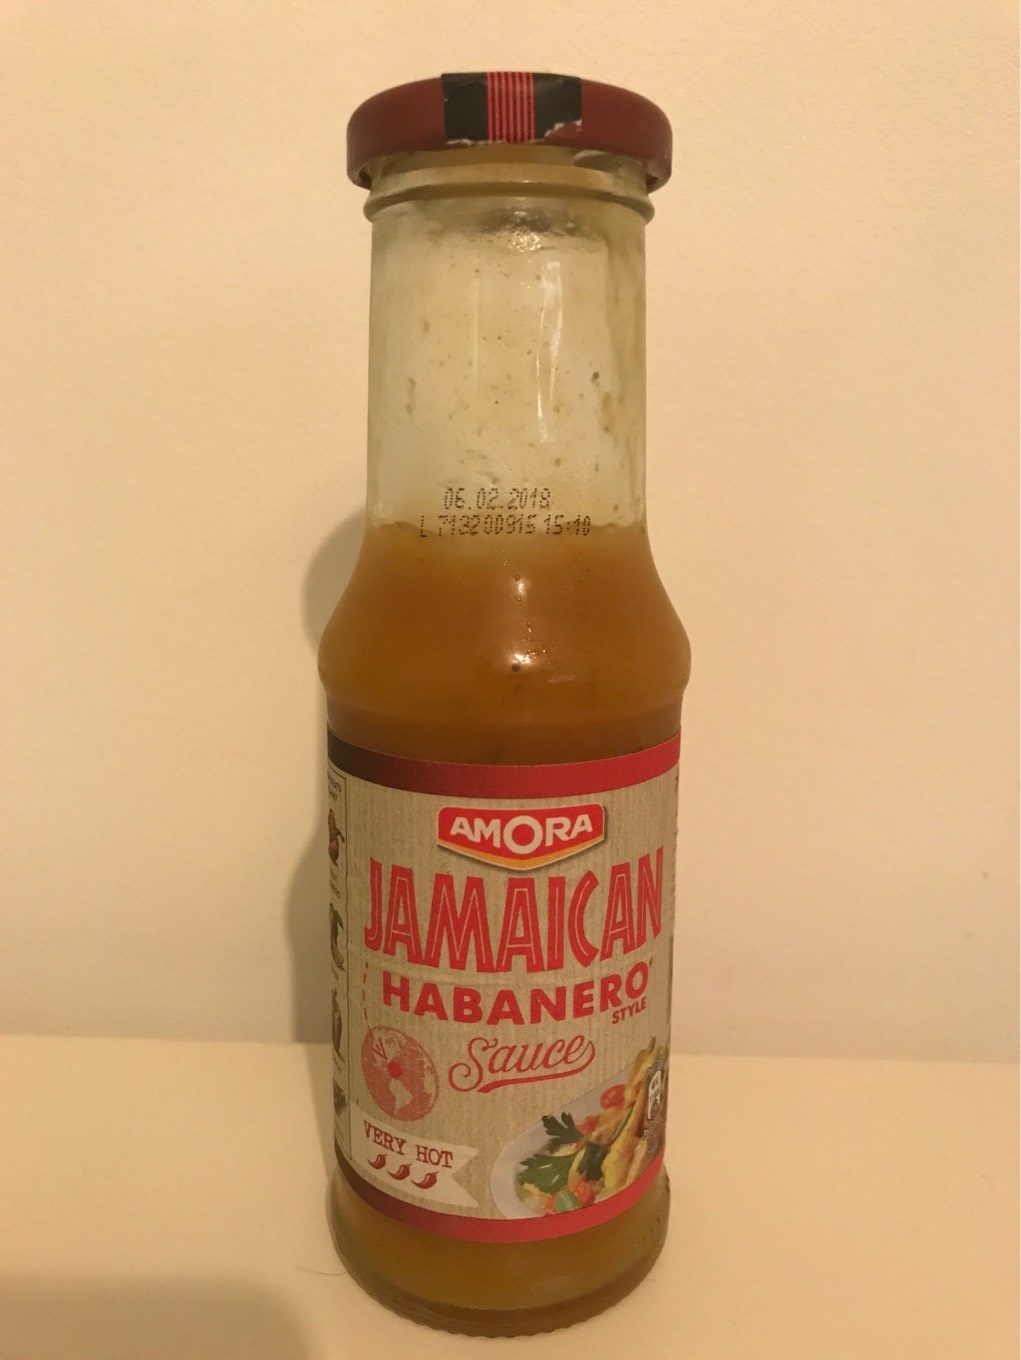 Sauce jamaican - habanero - Product - fr